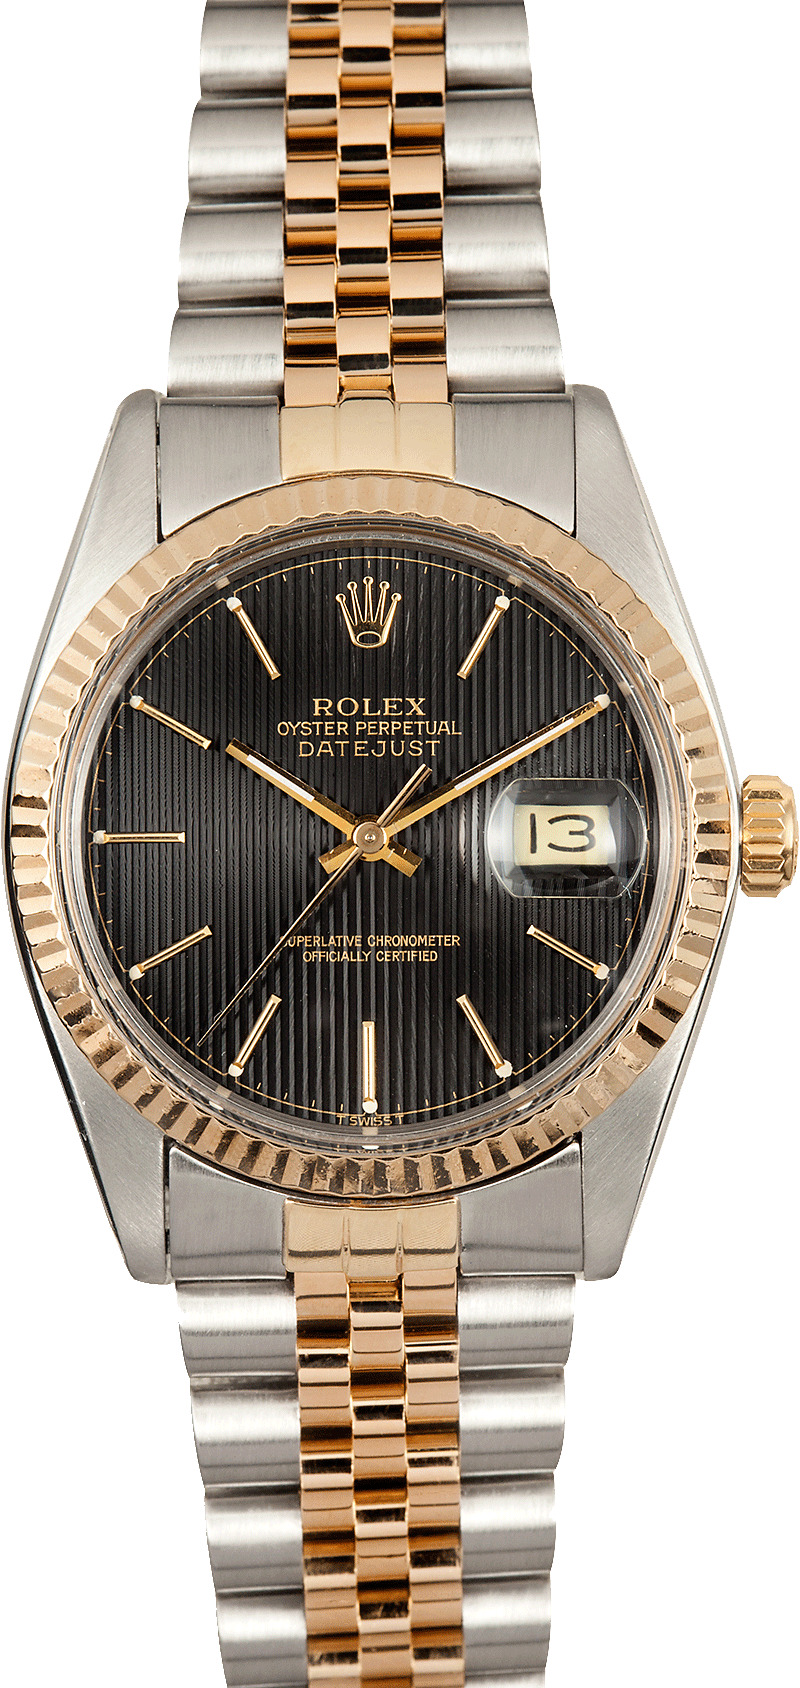 Refurbished Rolex Datejust 16013 - Buy 